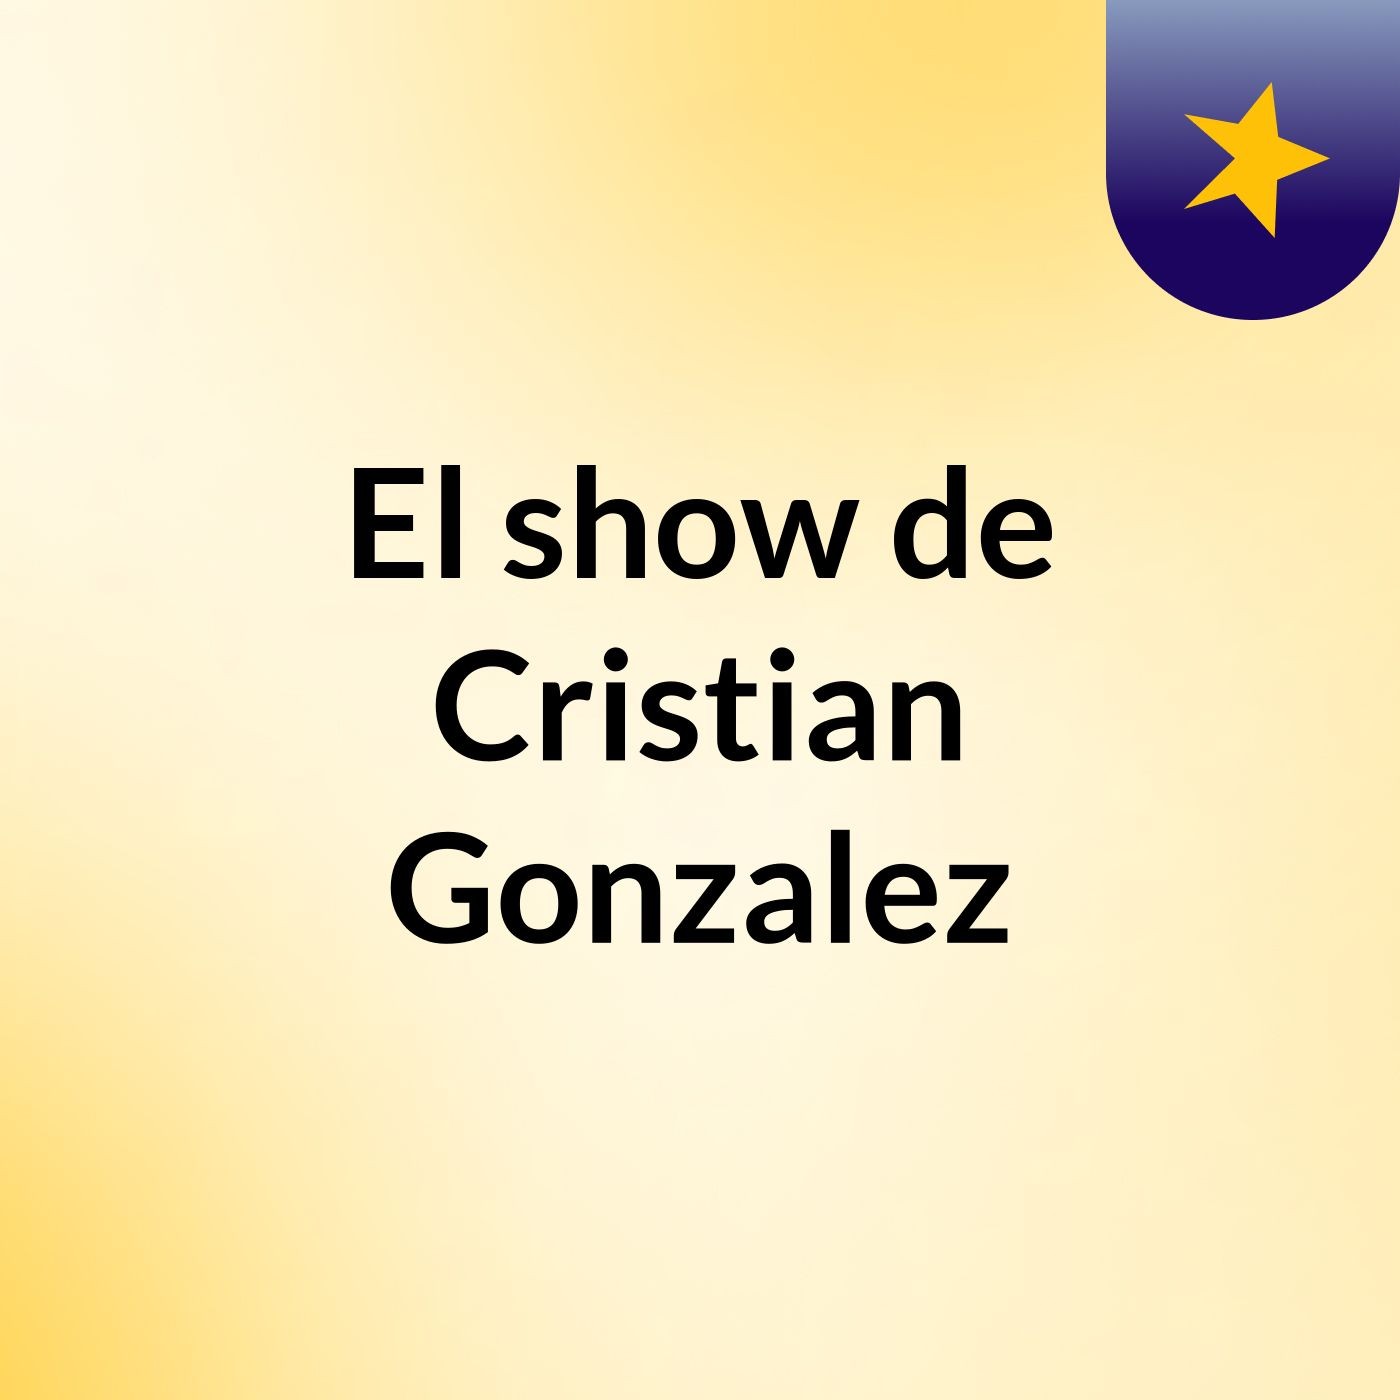 Episodio 15 - El show de Cristian Gonzalez